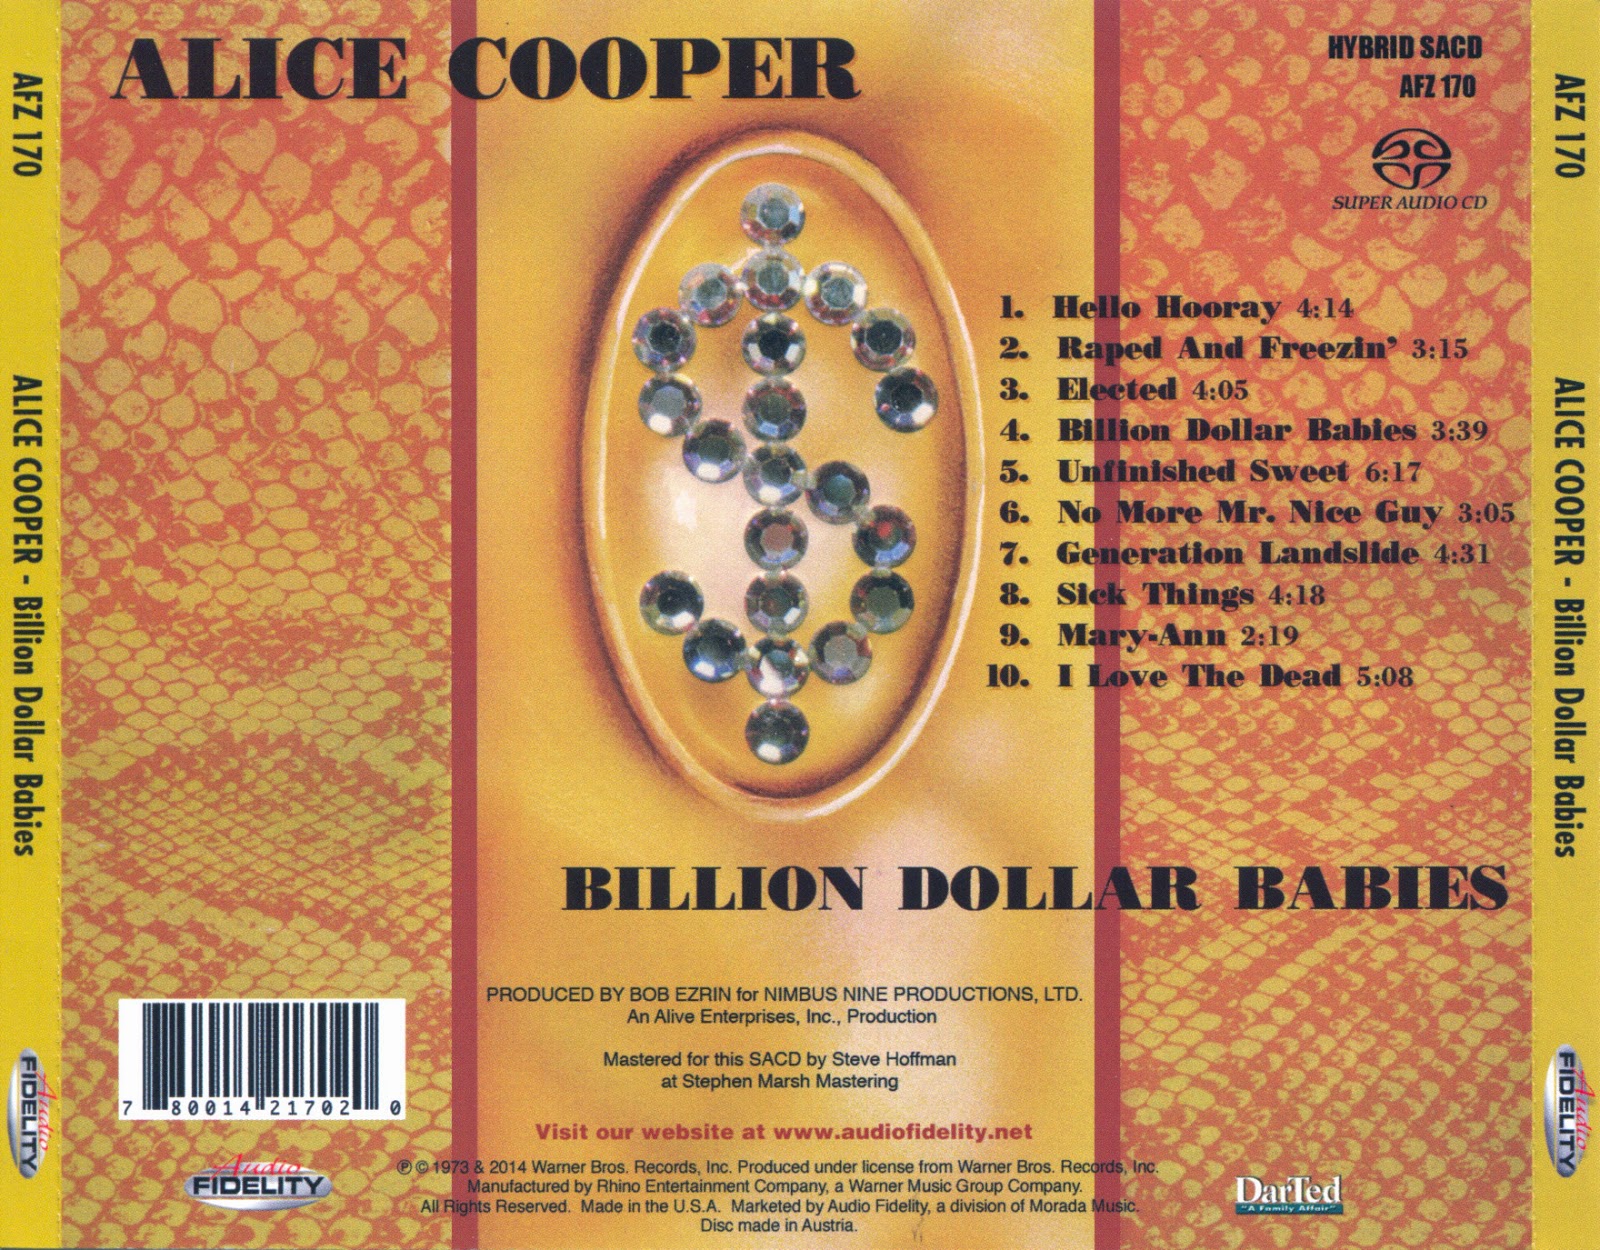 Baby billion. Alice Cooper billion Dollar Babies 1973. Диск Alice Cooper billion Dollar Babies. Alice Cooper billion Dollar Babies обложка. Обложка Элис Купер Биллион доллар бэби 1973.